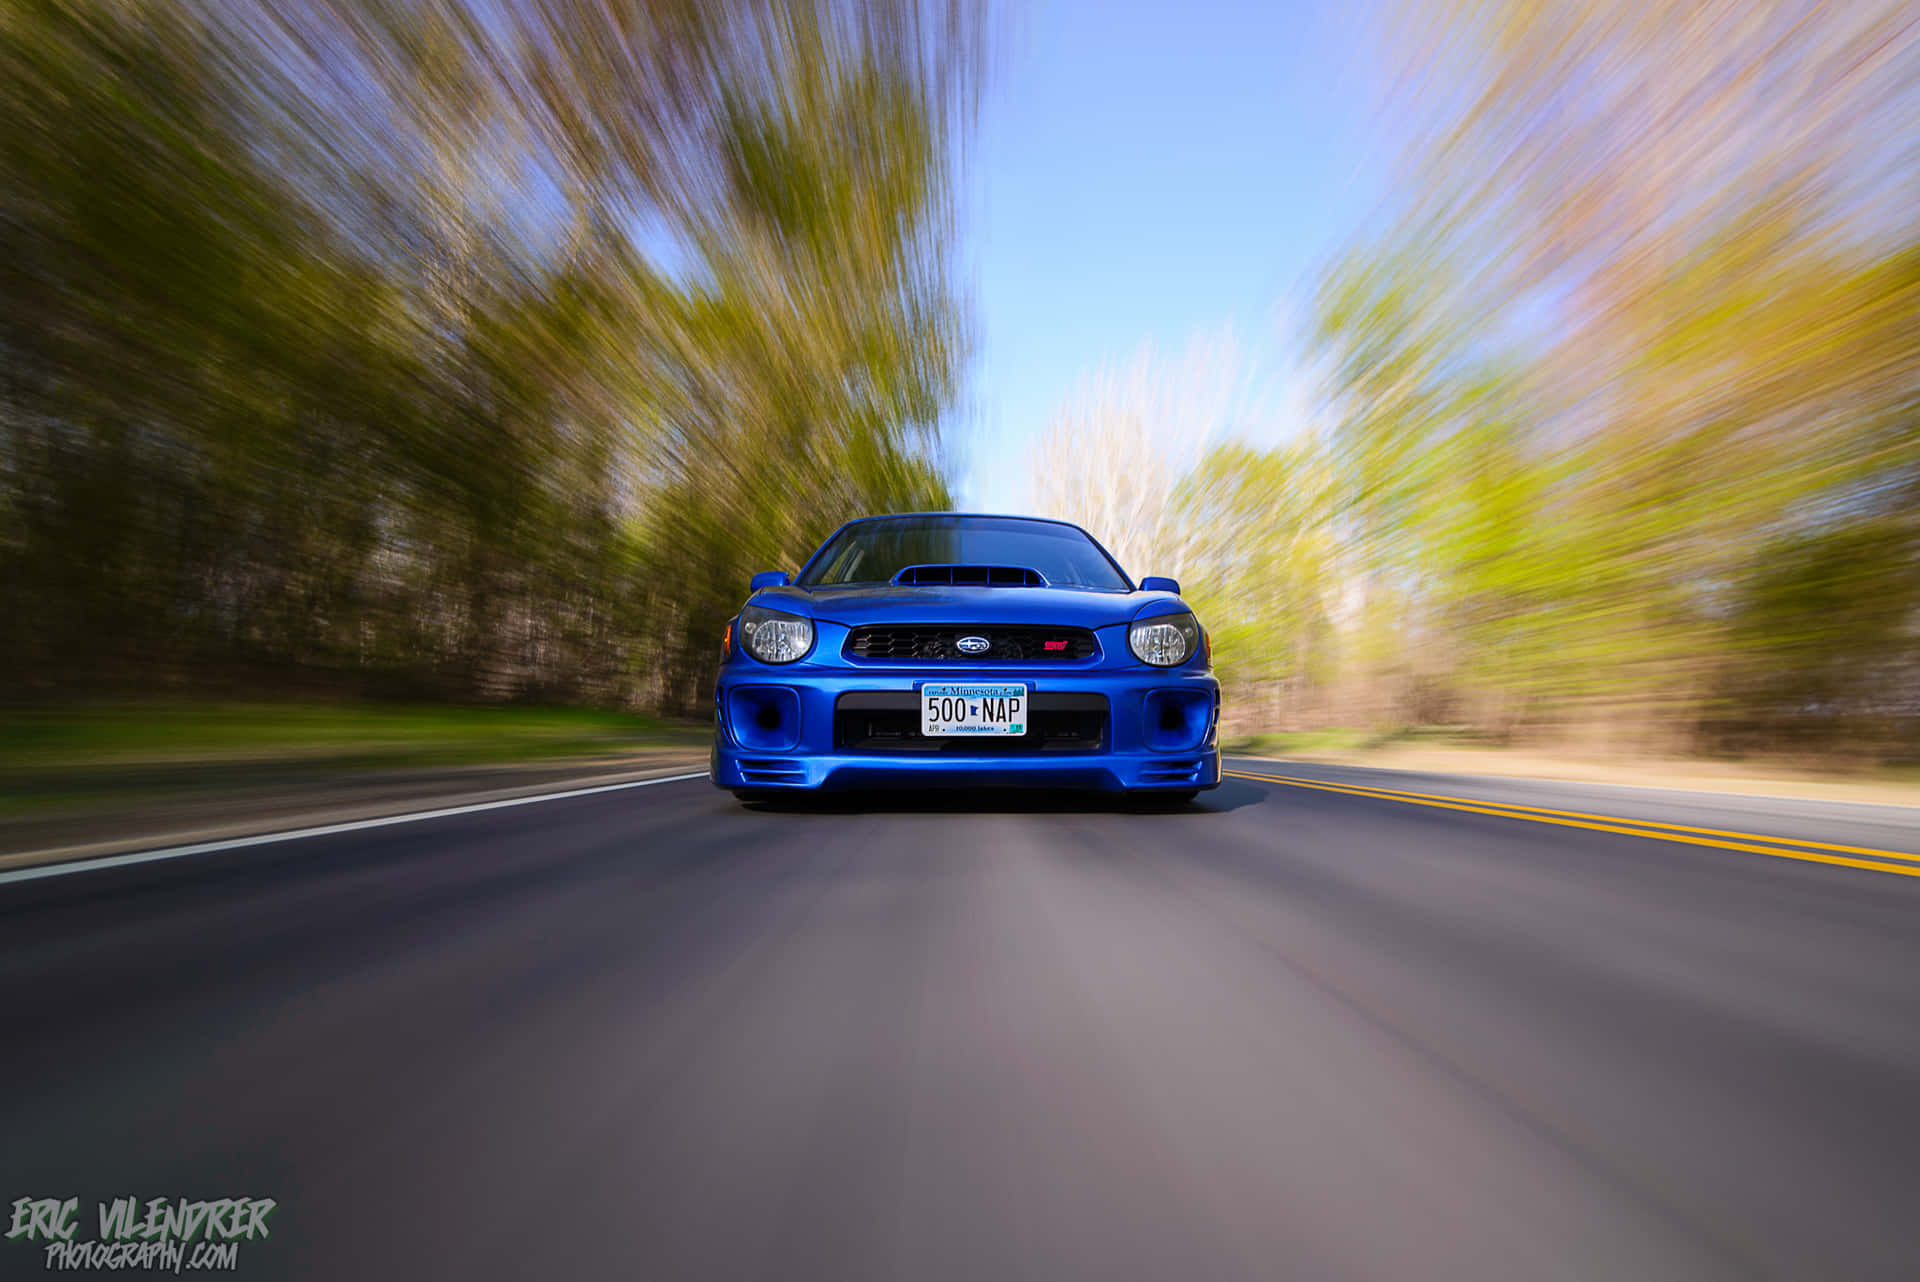 Thrilling Ride With The Iconic Subaru Impreza Wallpaper